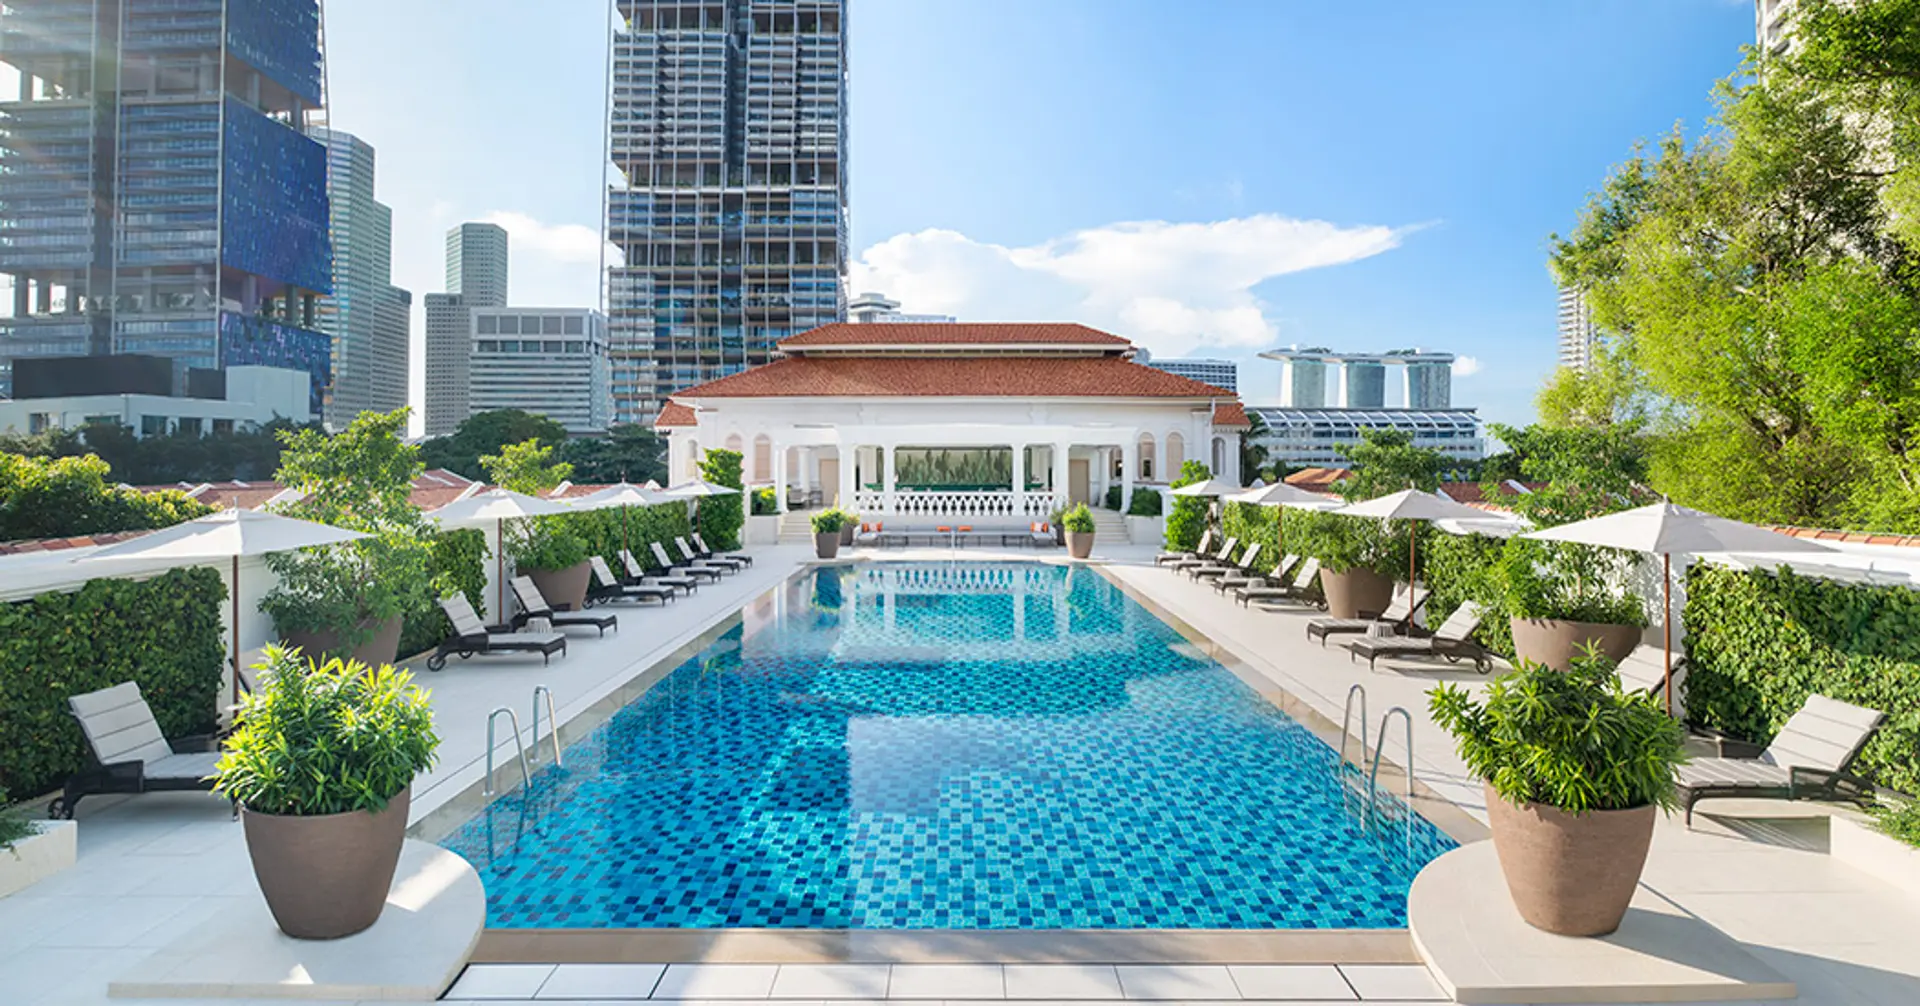 Hotel review Service & Facilities' - Raffles Singapore - 0